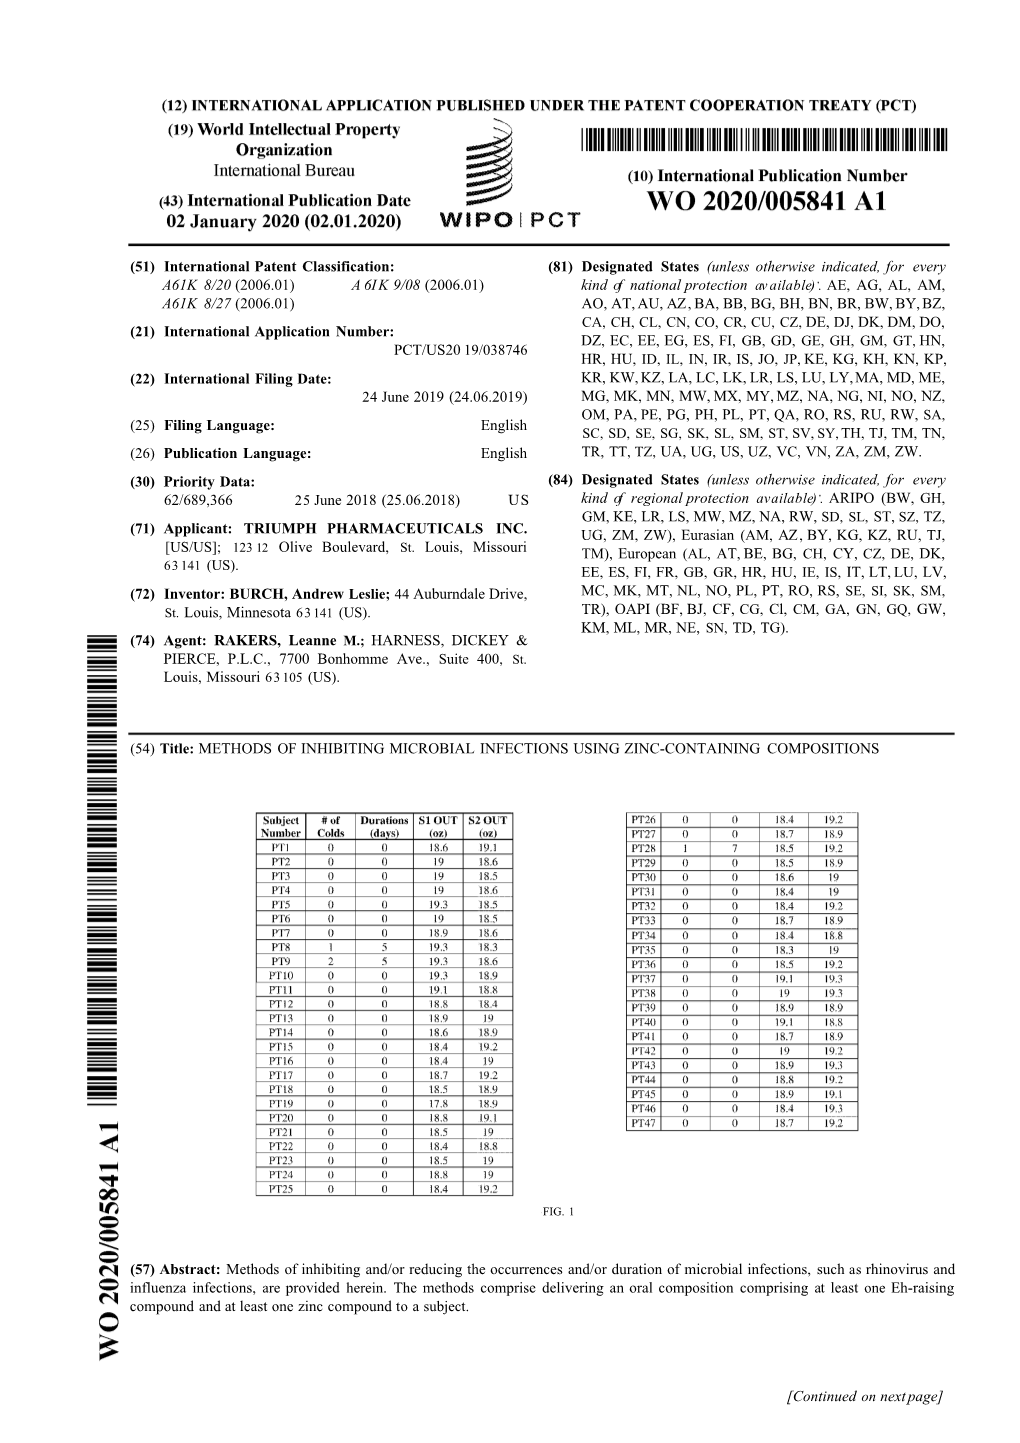 (51) International Patent Classification: (81) Designated States (Unless